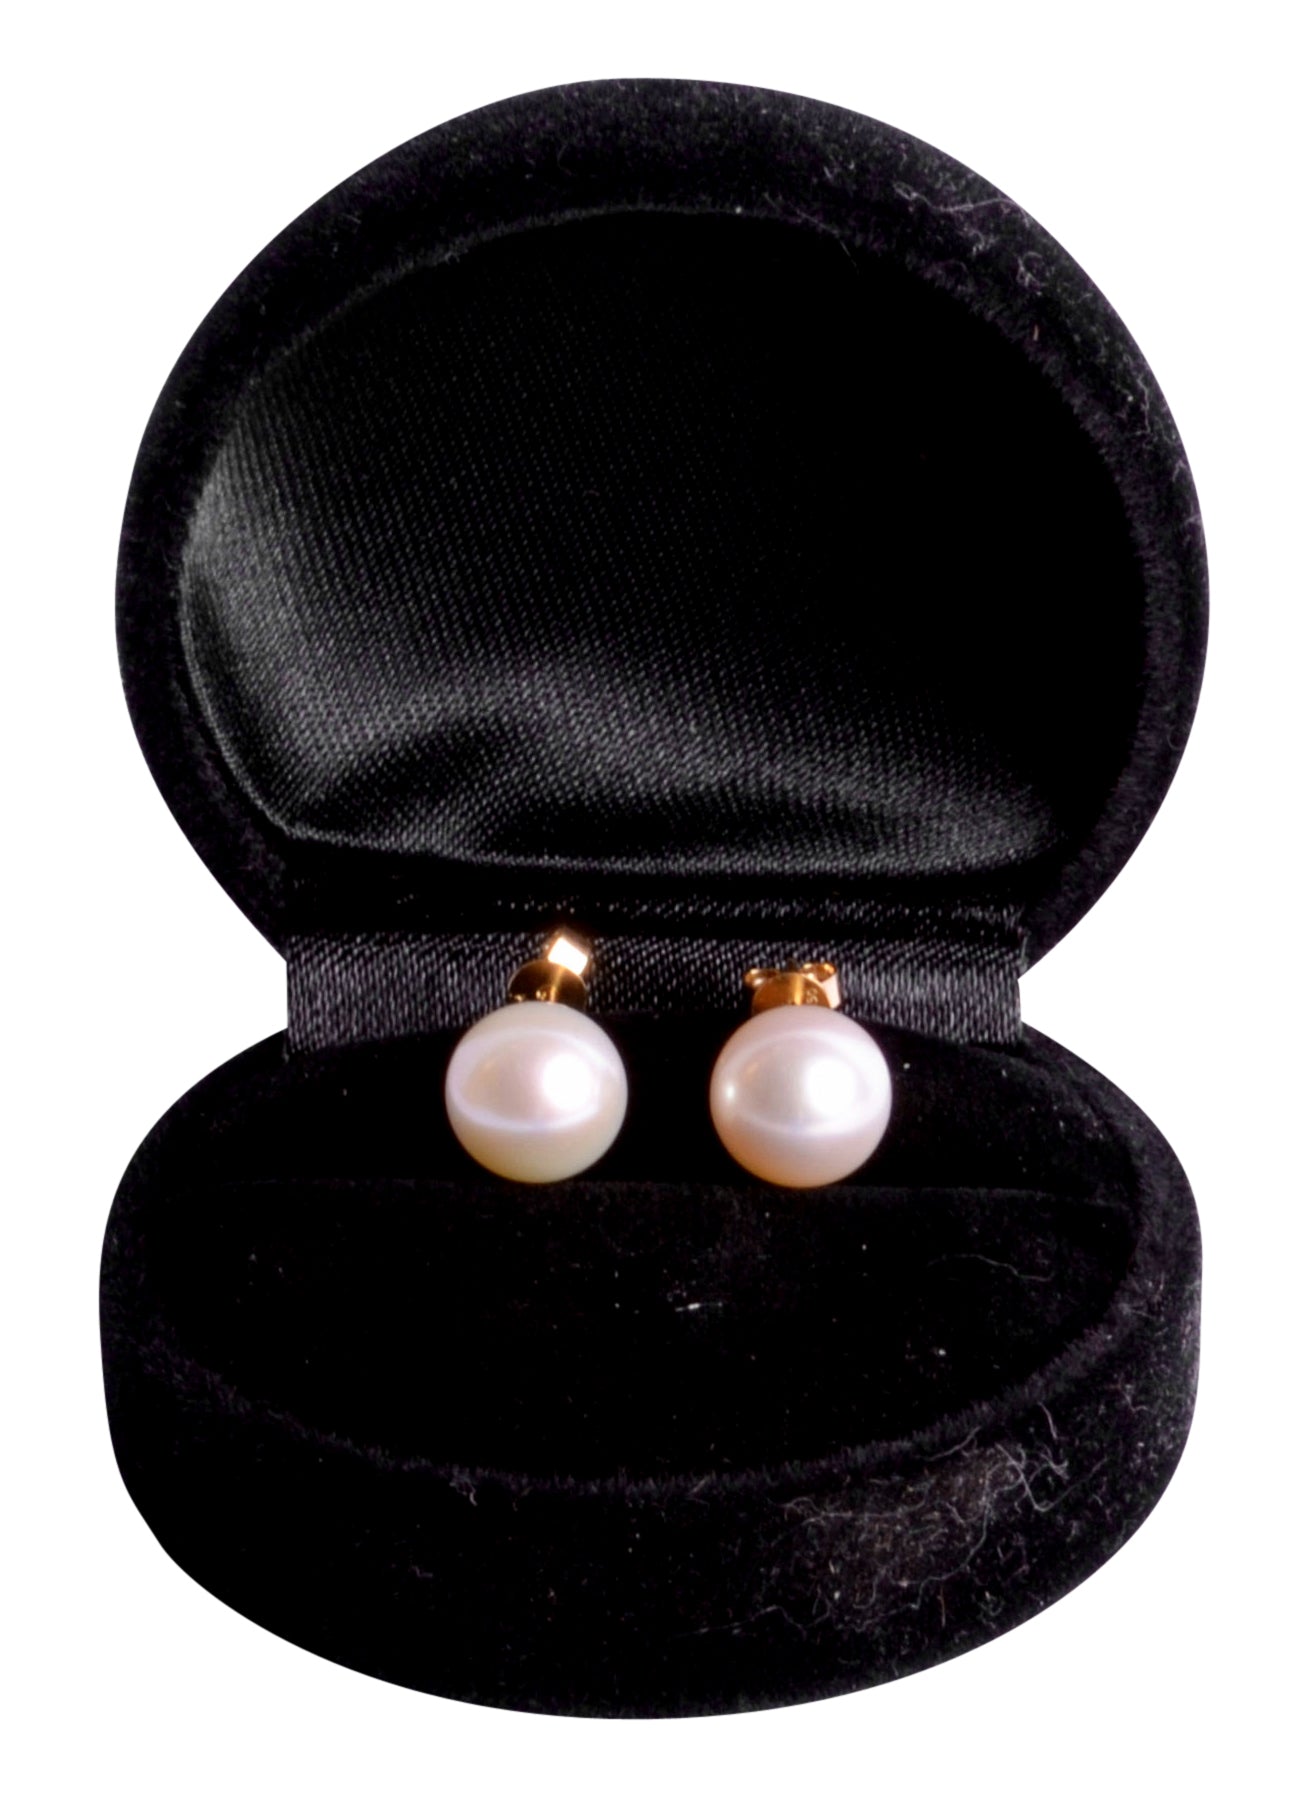 18K Gold White Pearl Stud Earrings | SilverAndGold